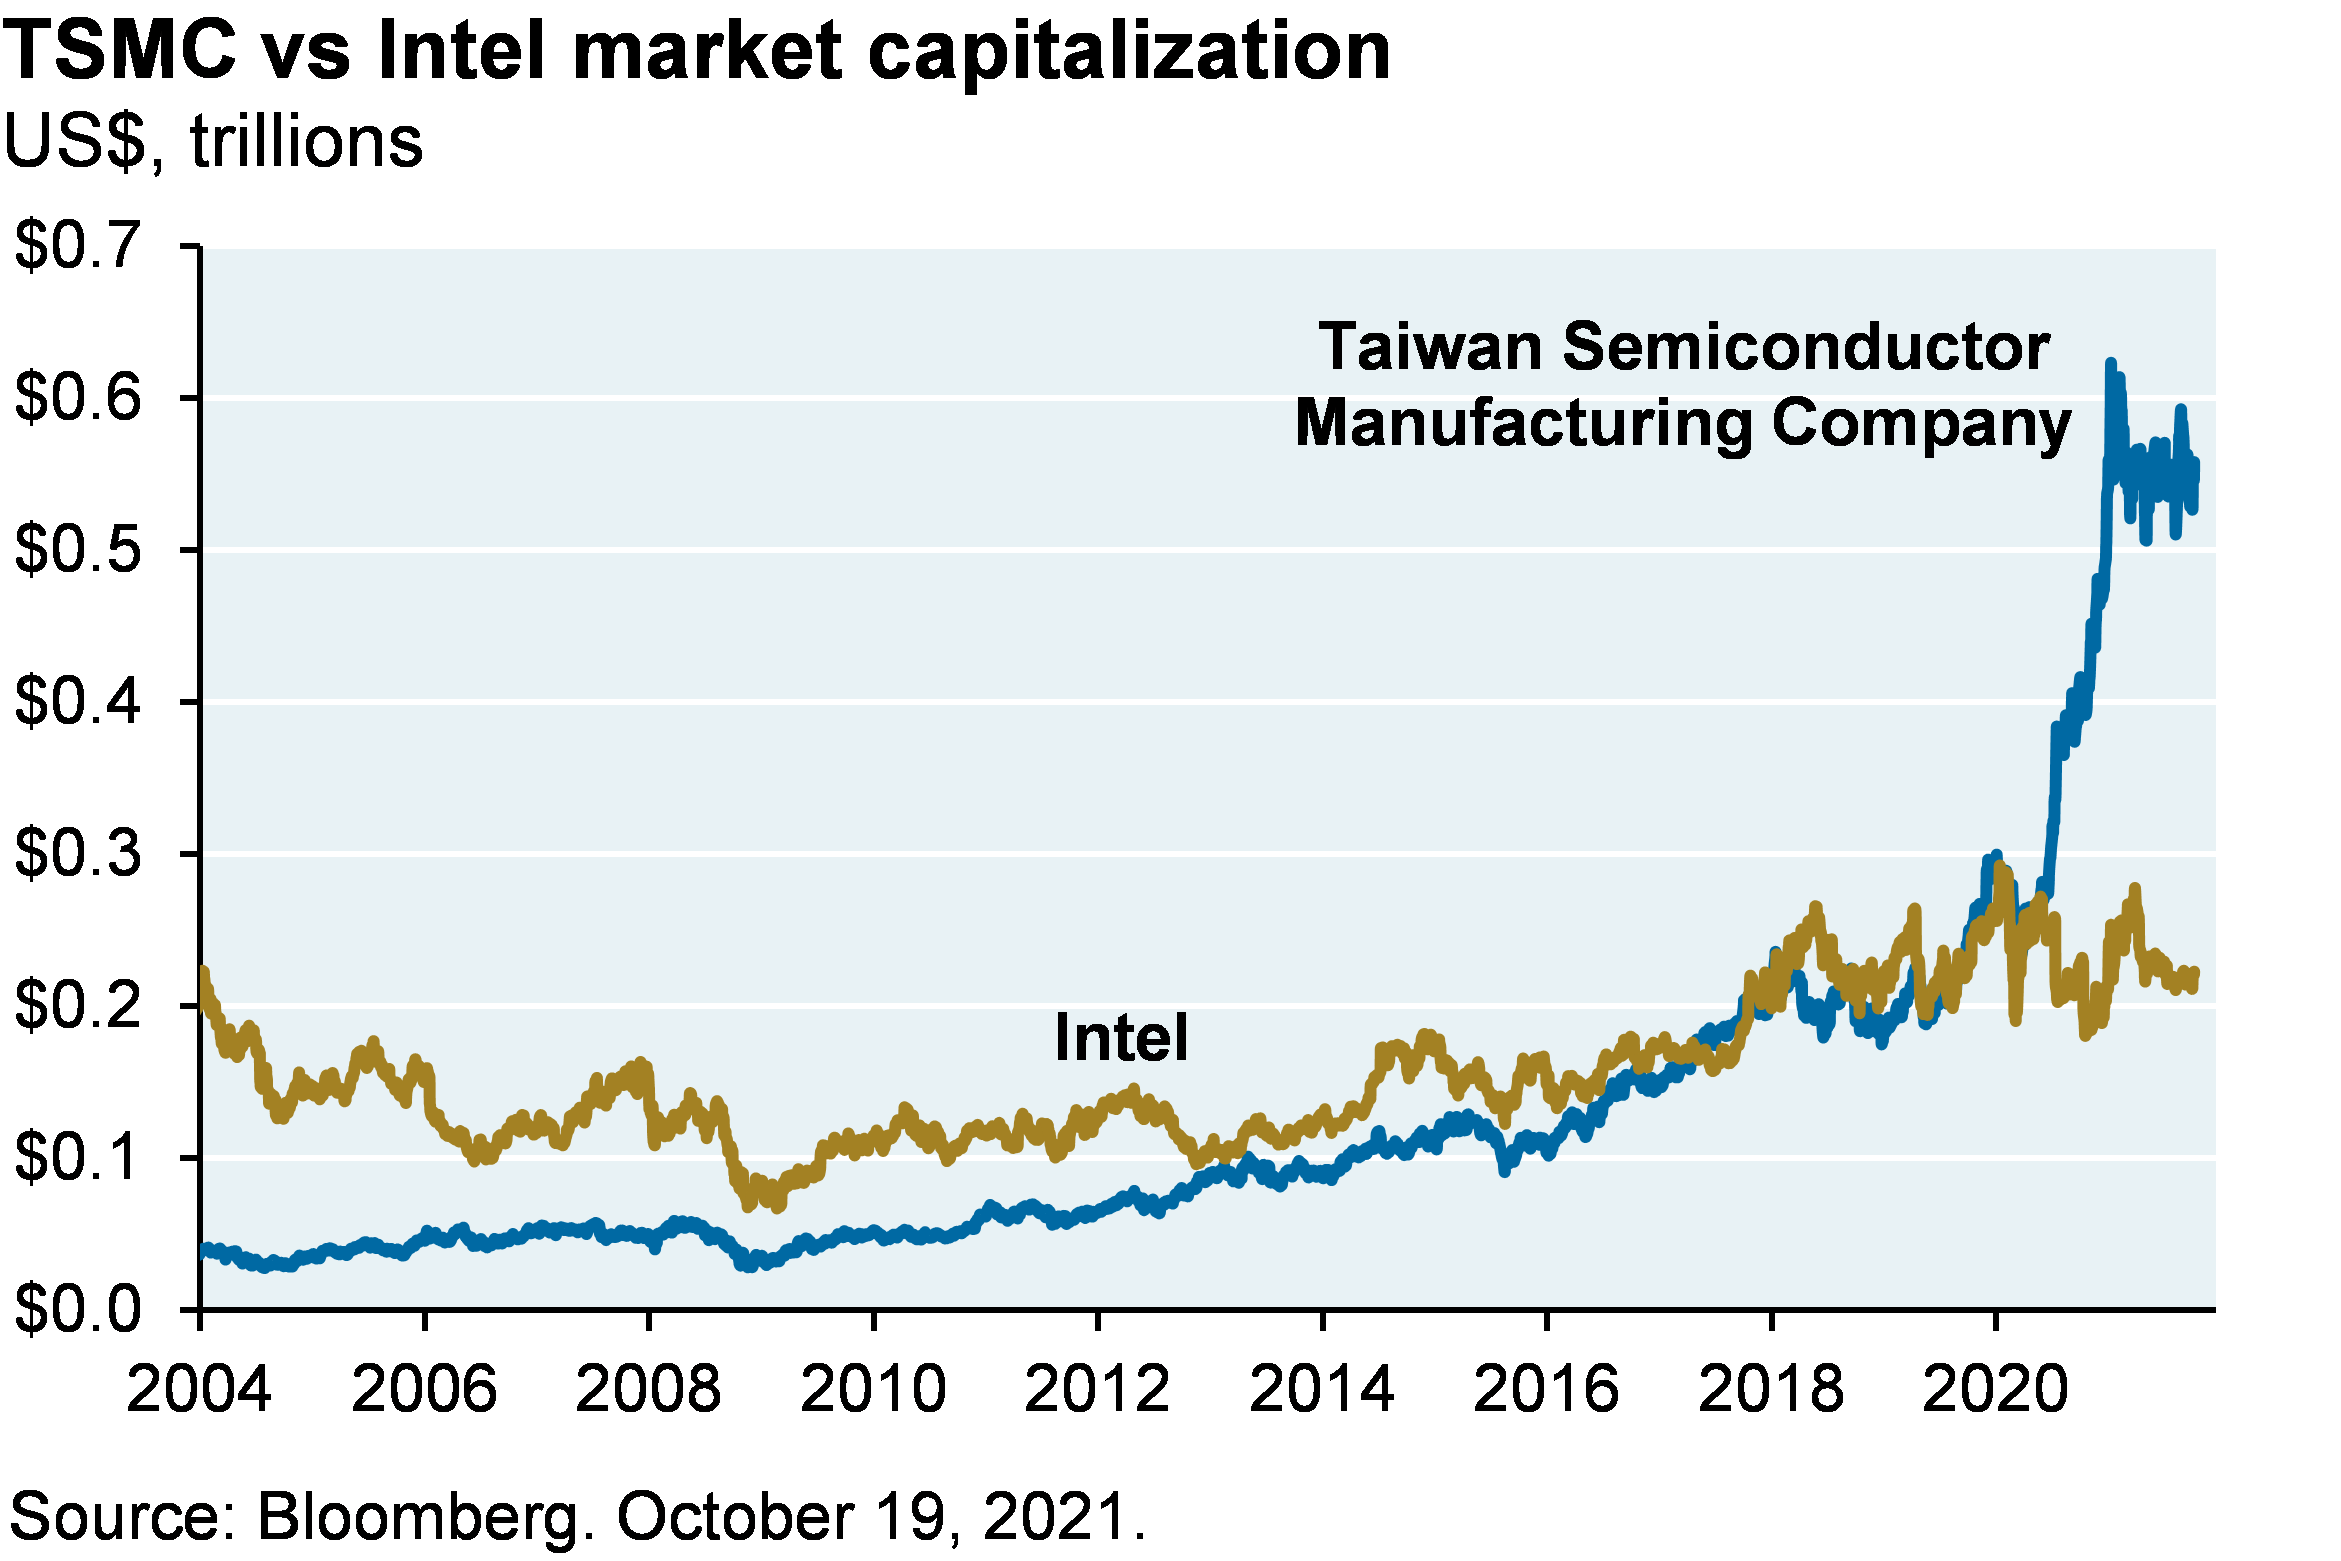 TSMC vs Intel market capitalization